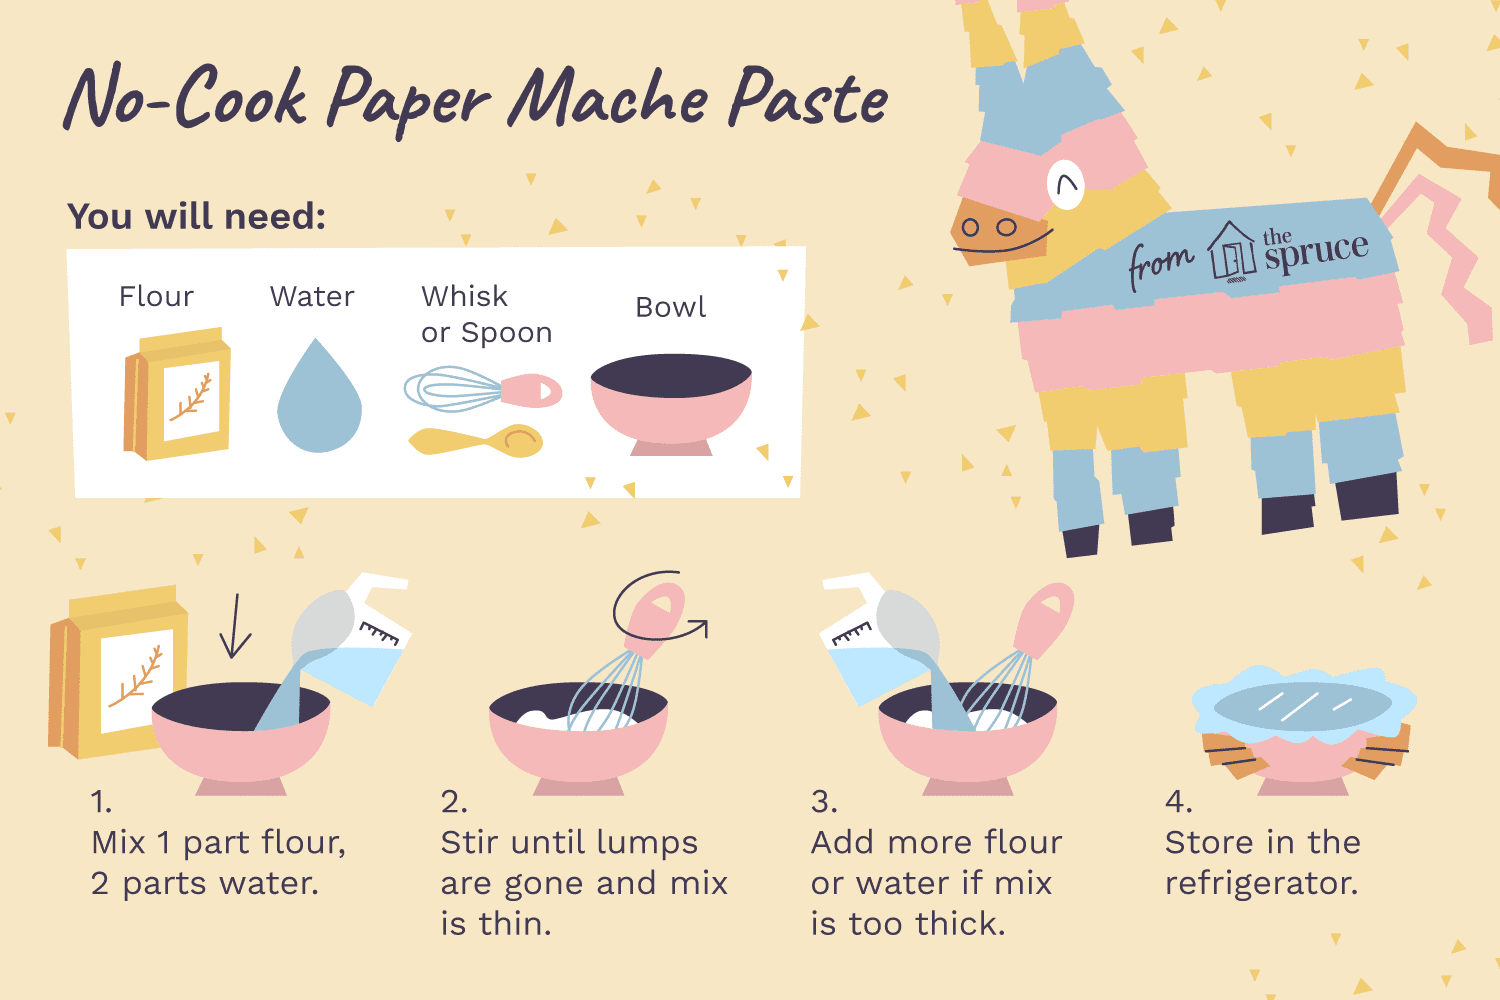 how to make no-cook paper mache paste